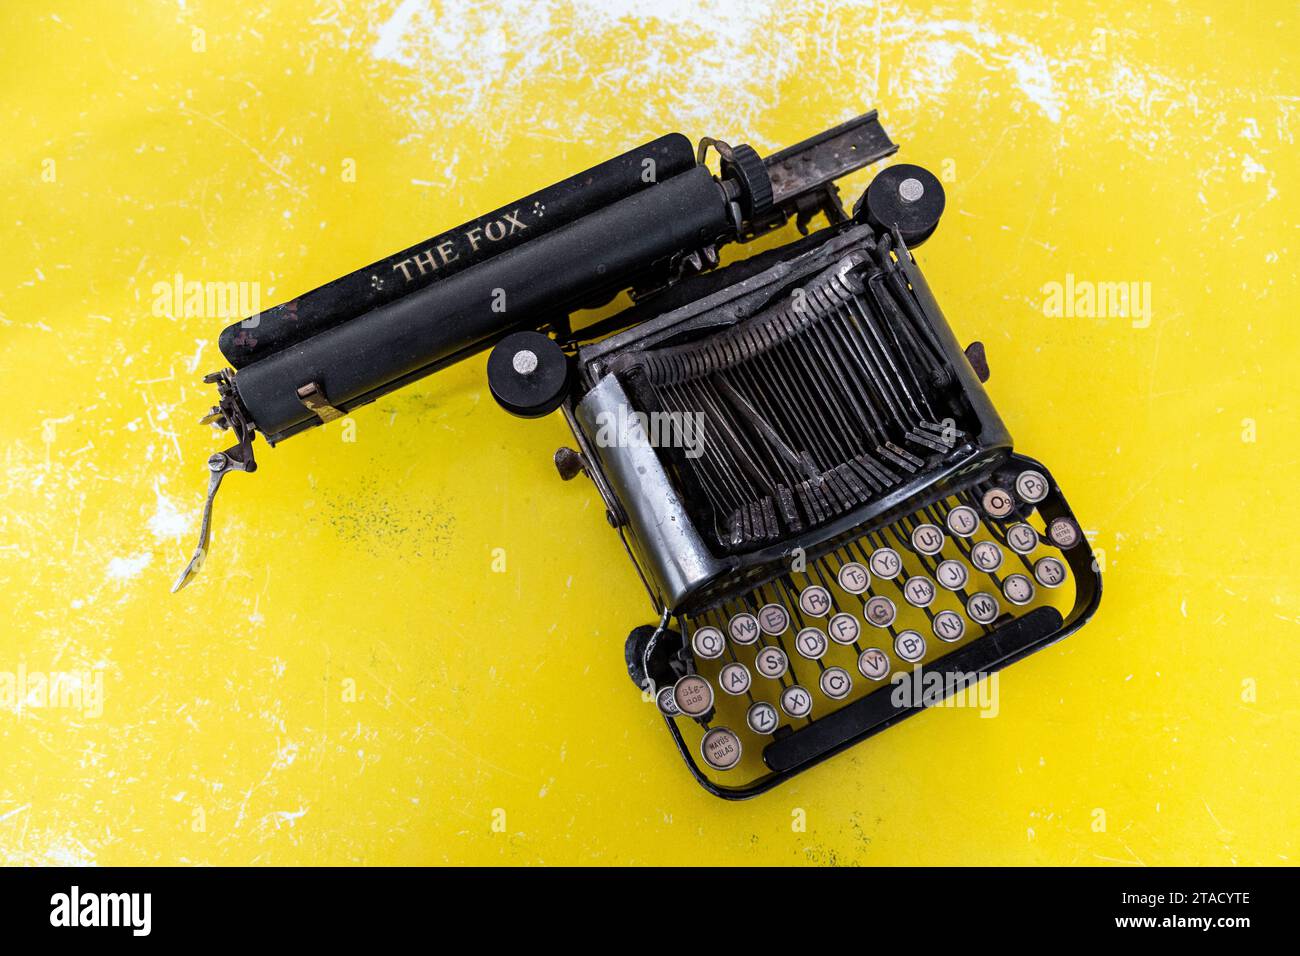 The Fox vintage typewriter on yellow background Stock Photo